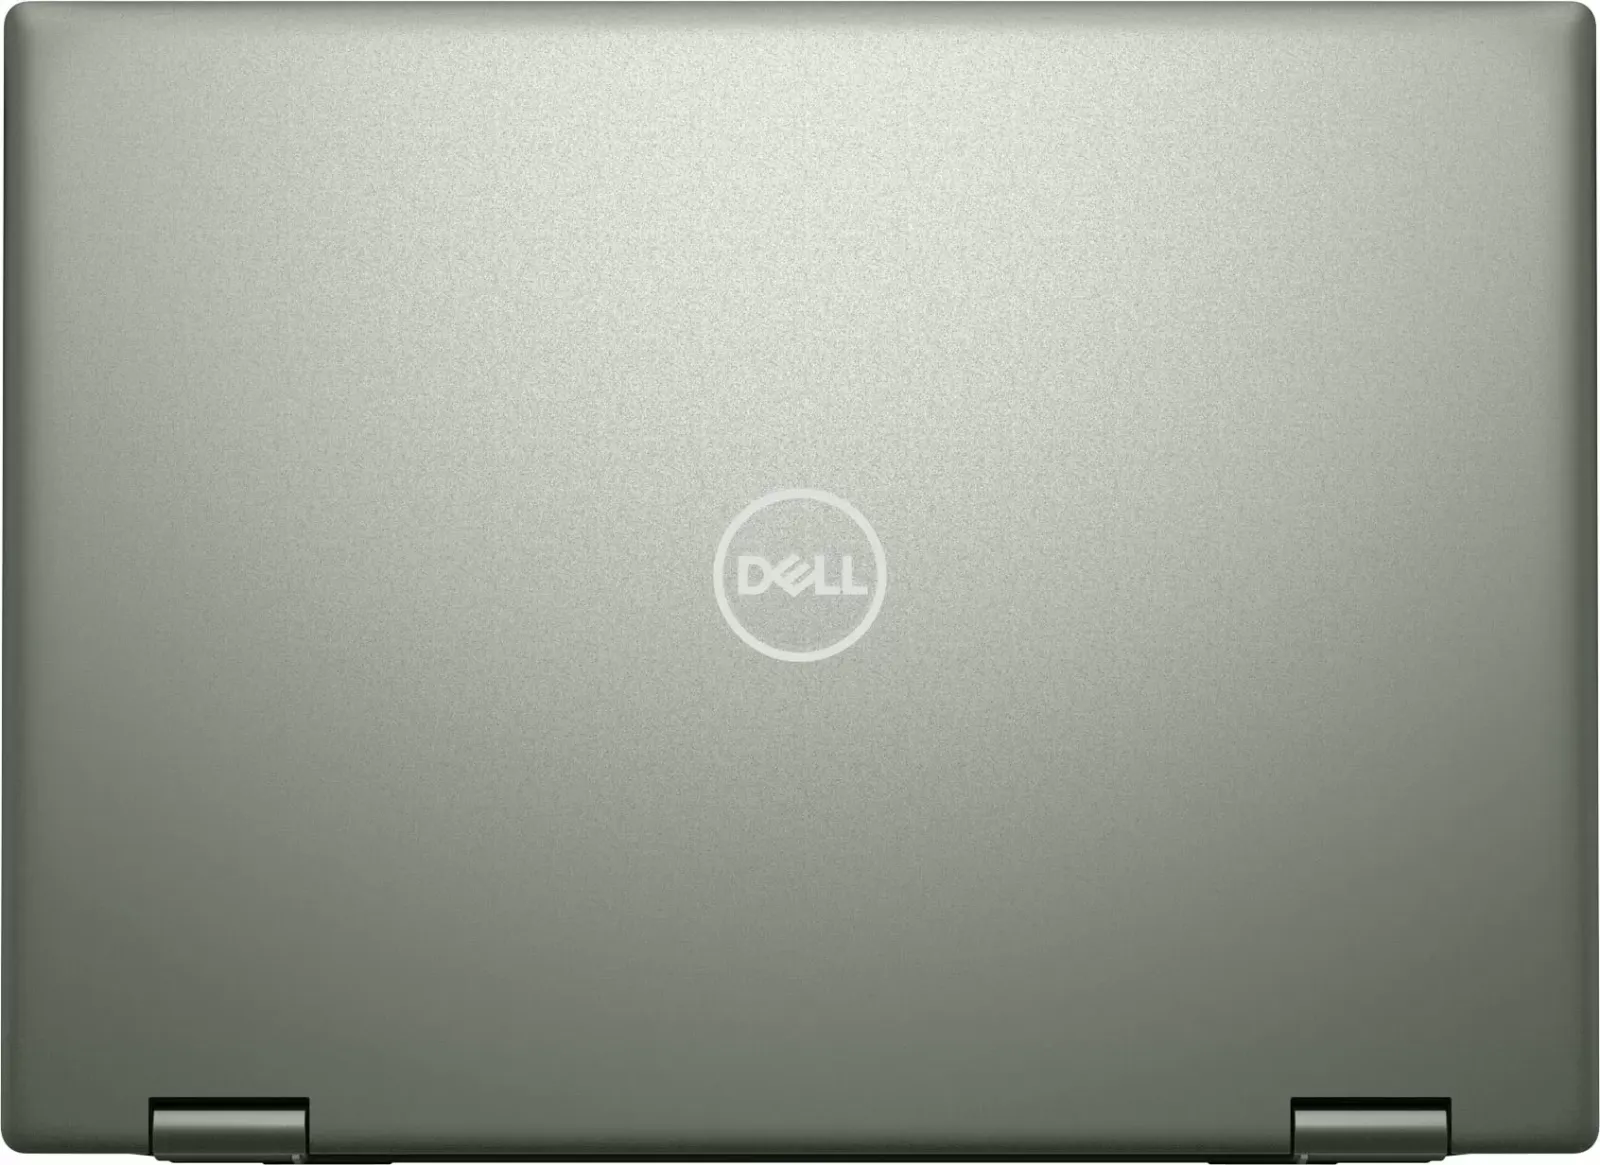 Ноутбук Dell Inspiron 7425 (I7425-A242PBL-PUS) CUSTOM недорого